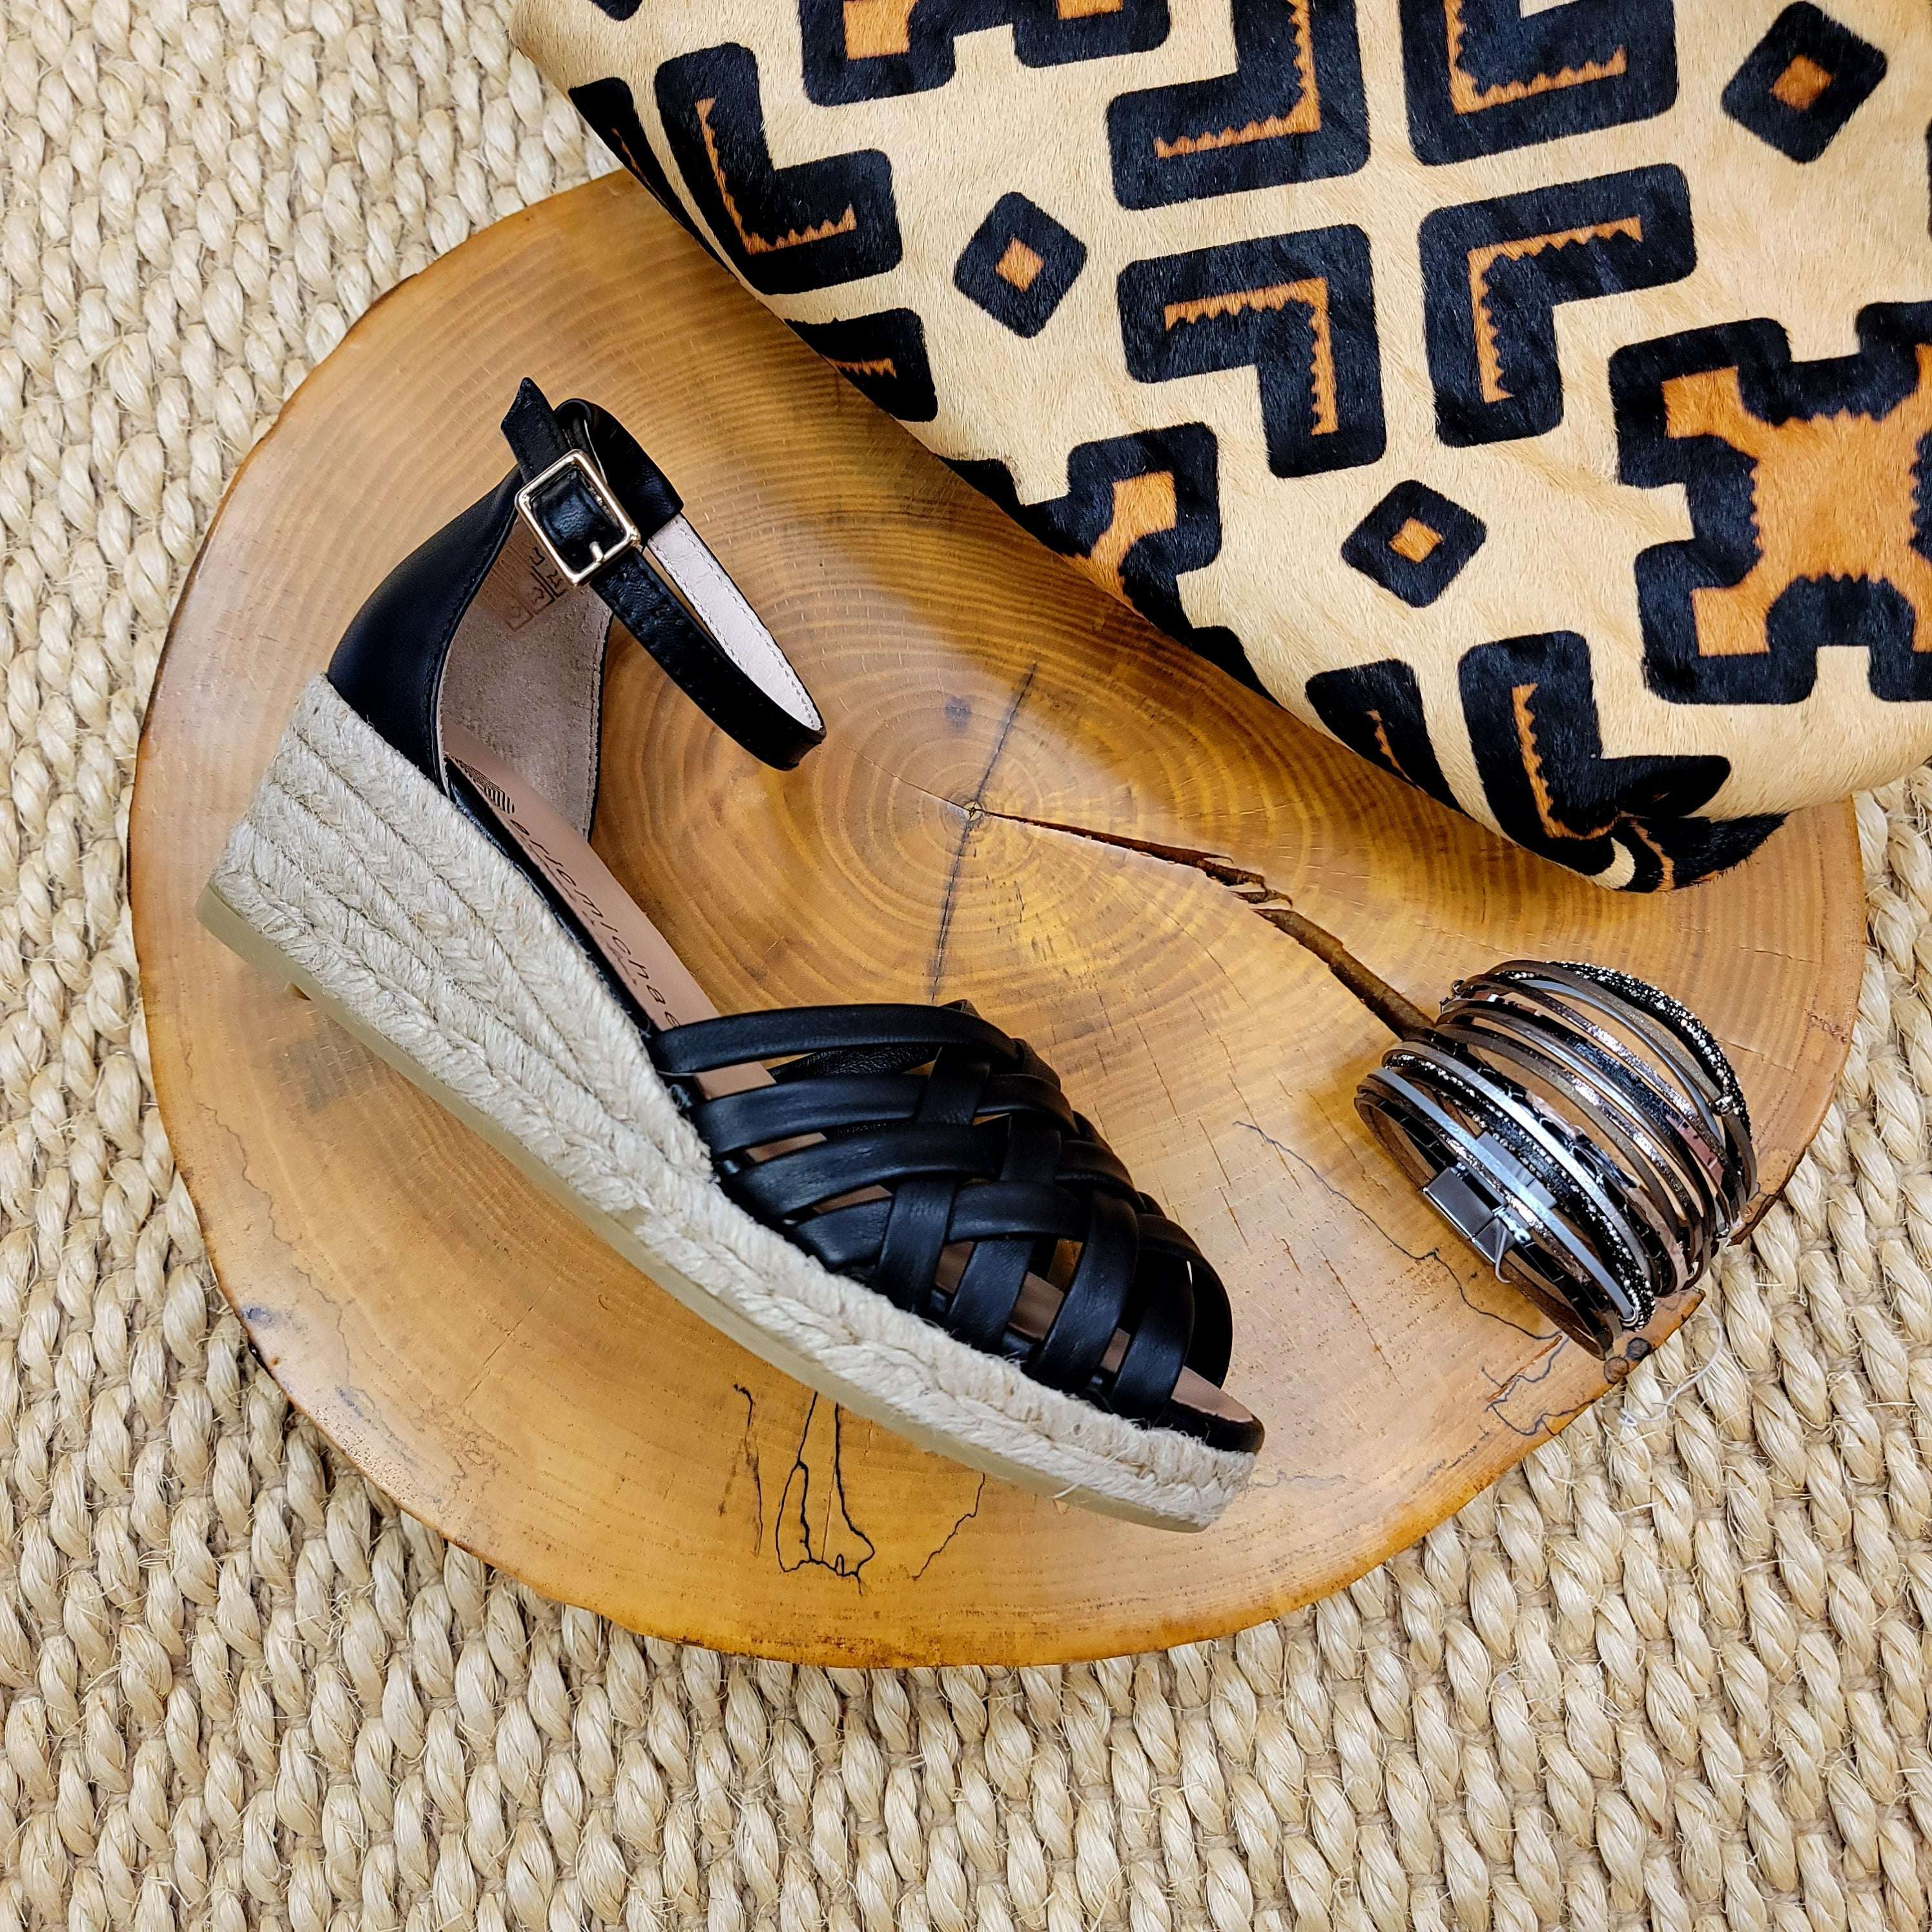 Porto Black Wedge Sandal - Ladies Sandals from Lunar Shoes UK